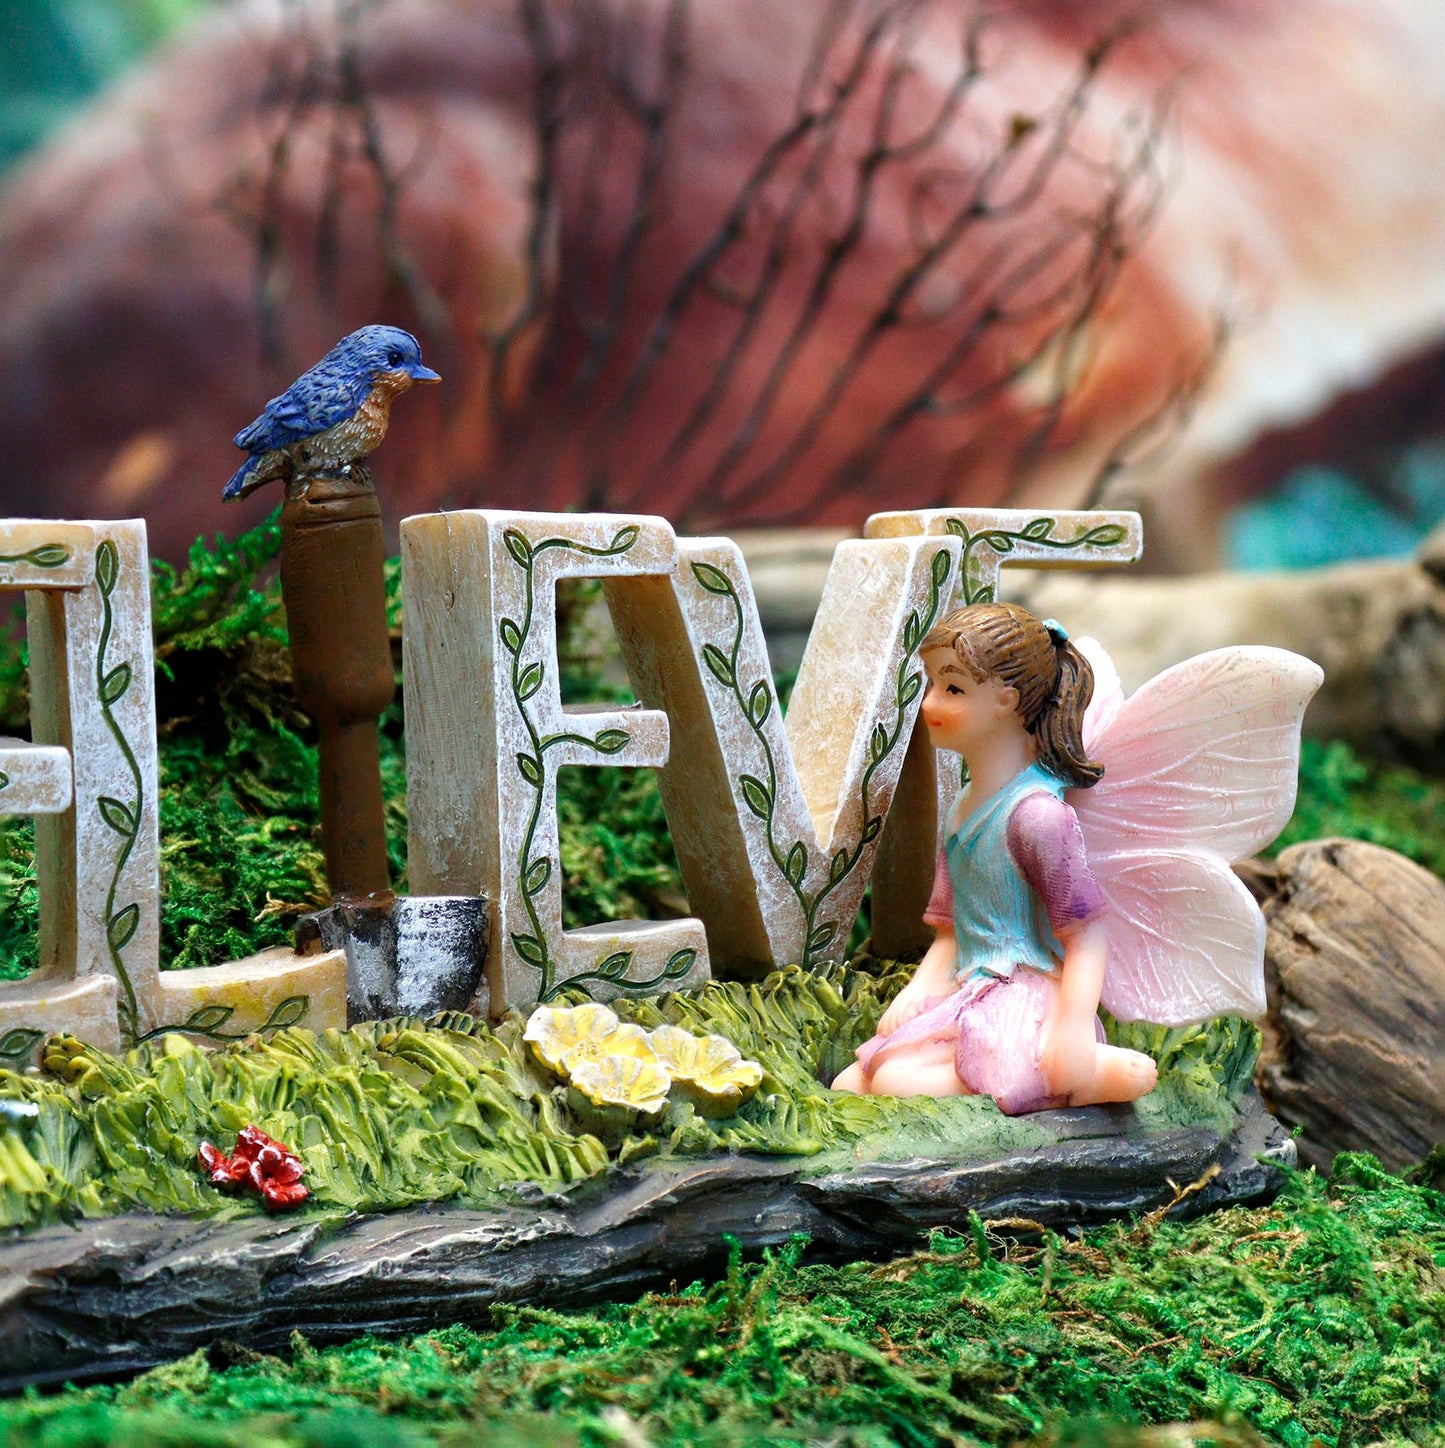 "Believe" Fairy Garden Monument